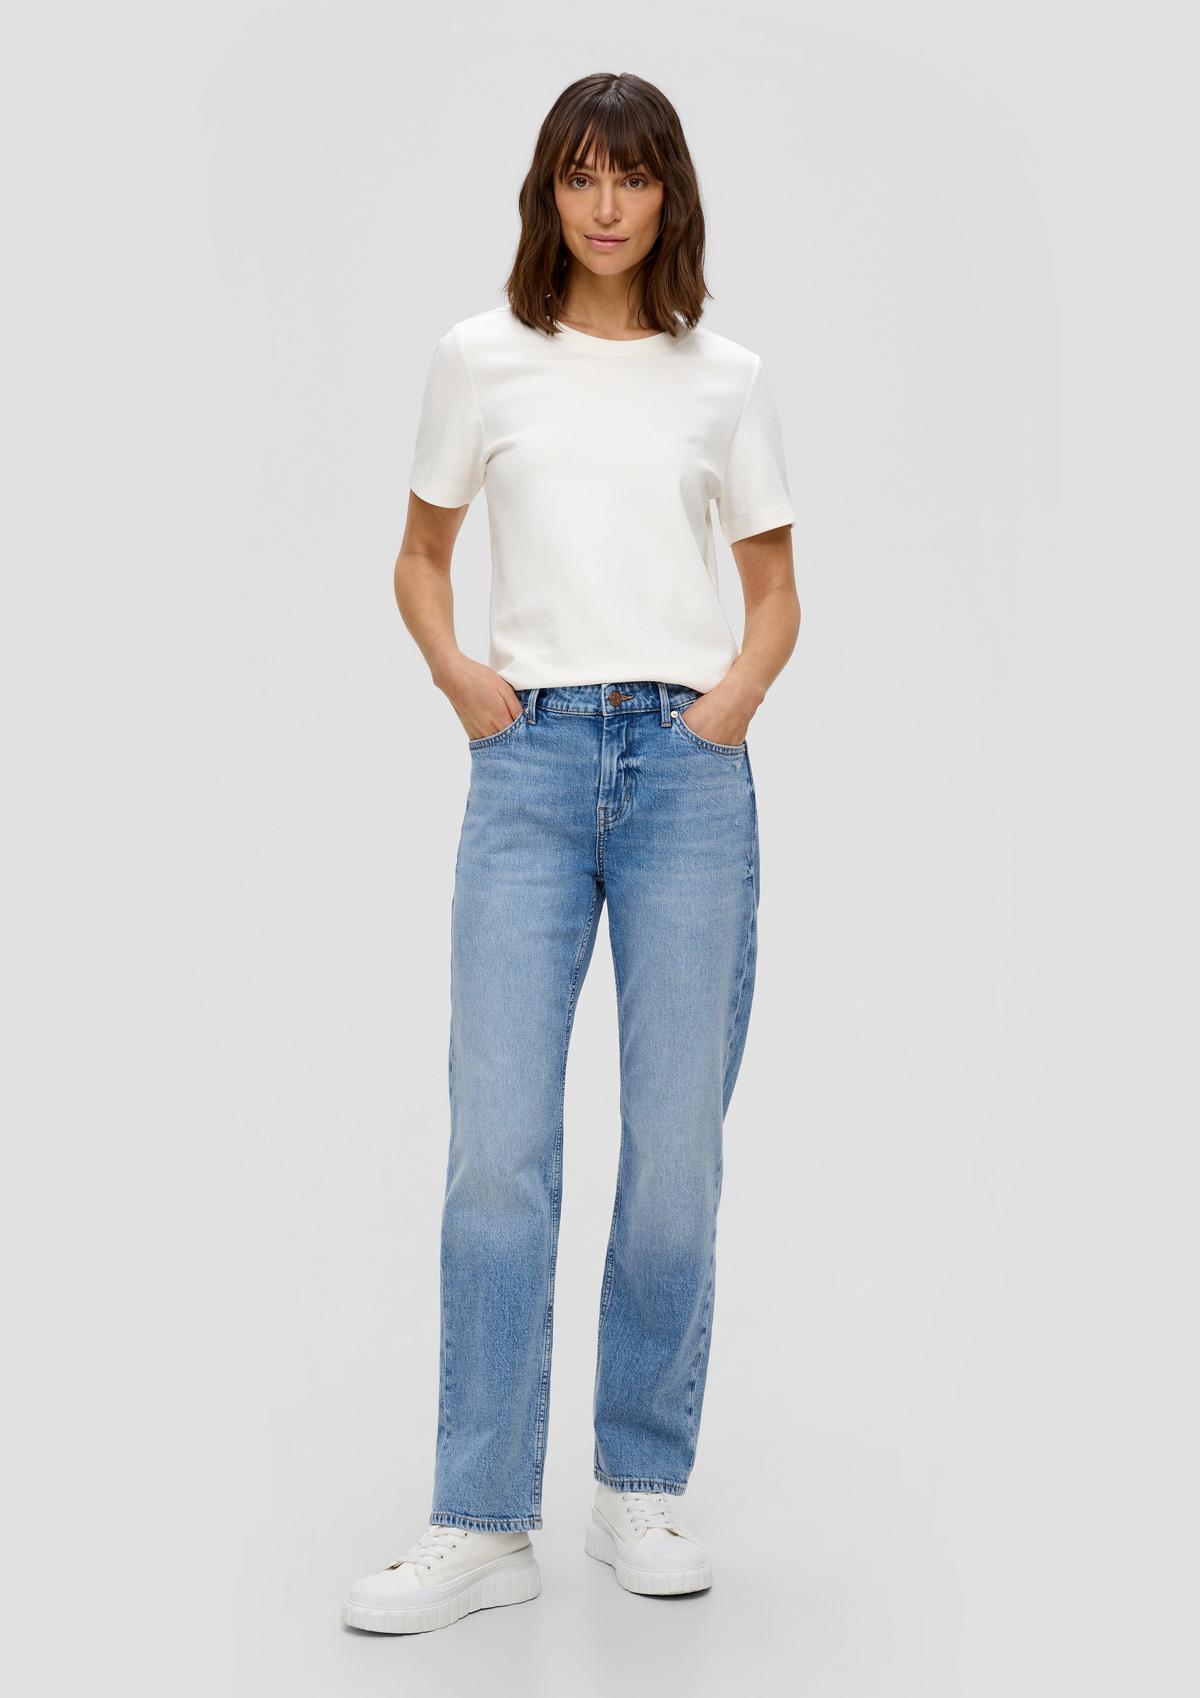 Karolin jeans / regular fit / mid rise / straight leg